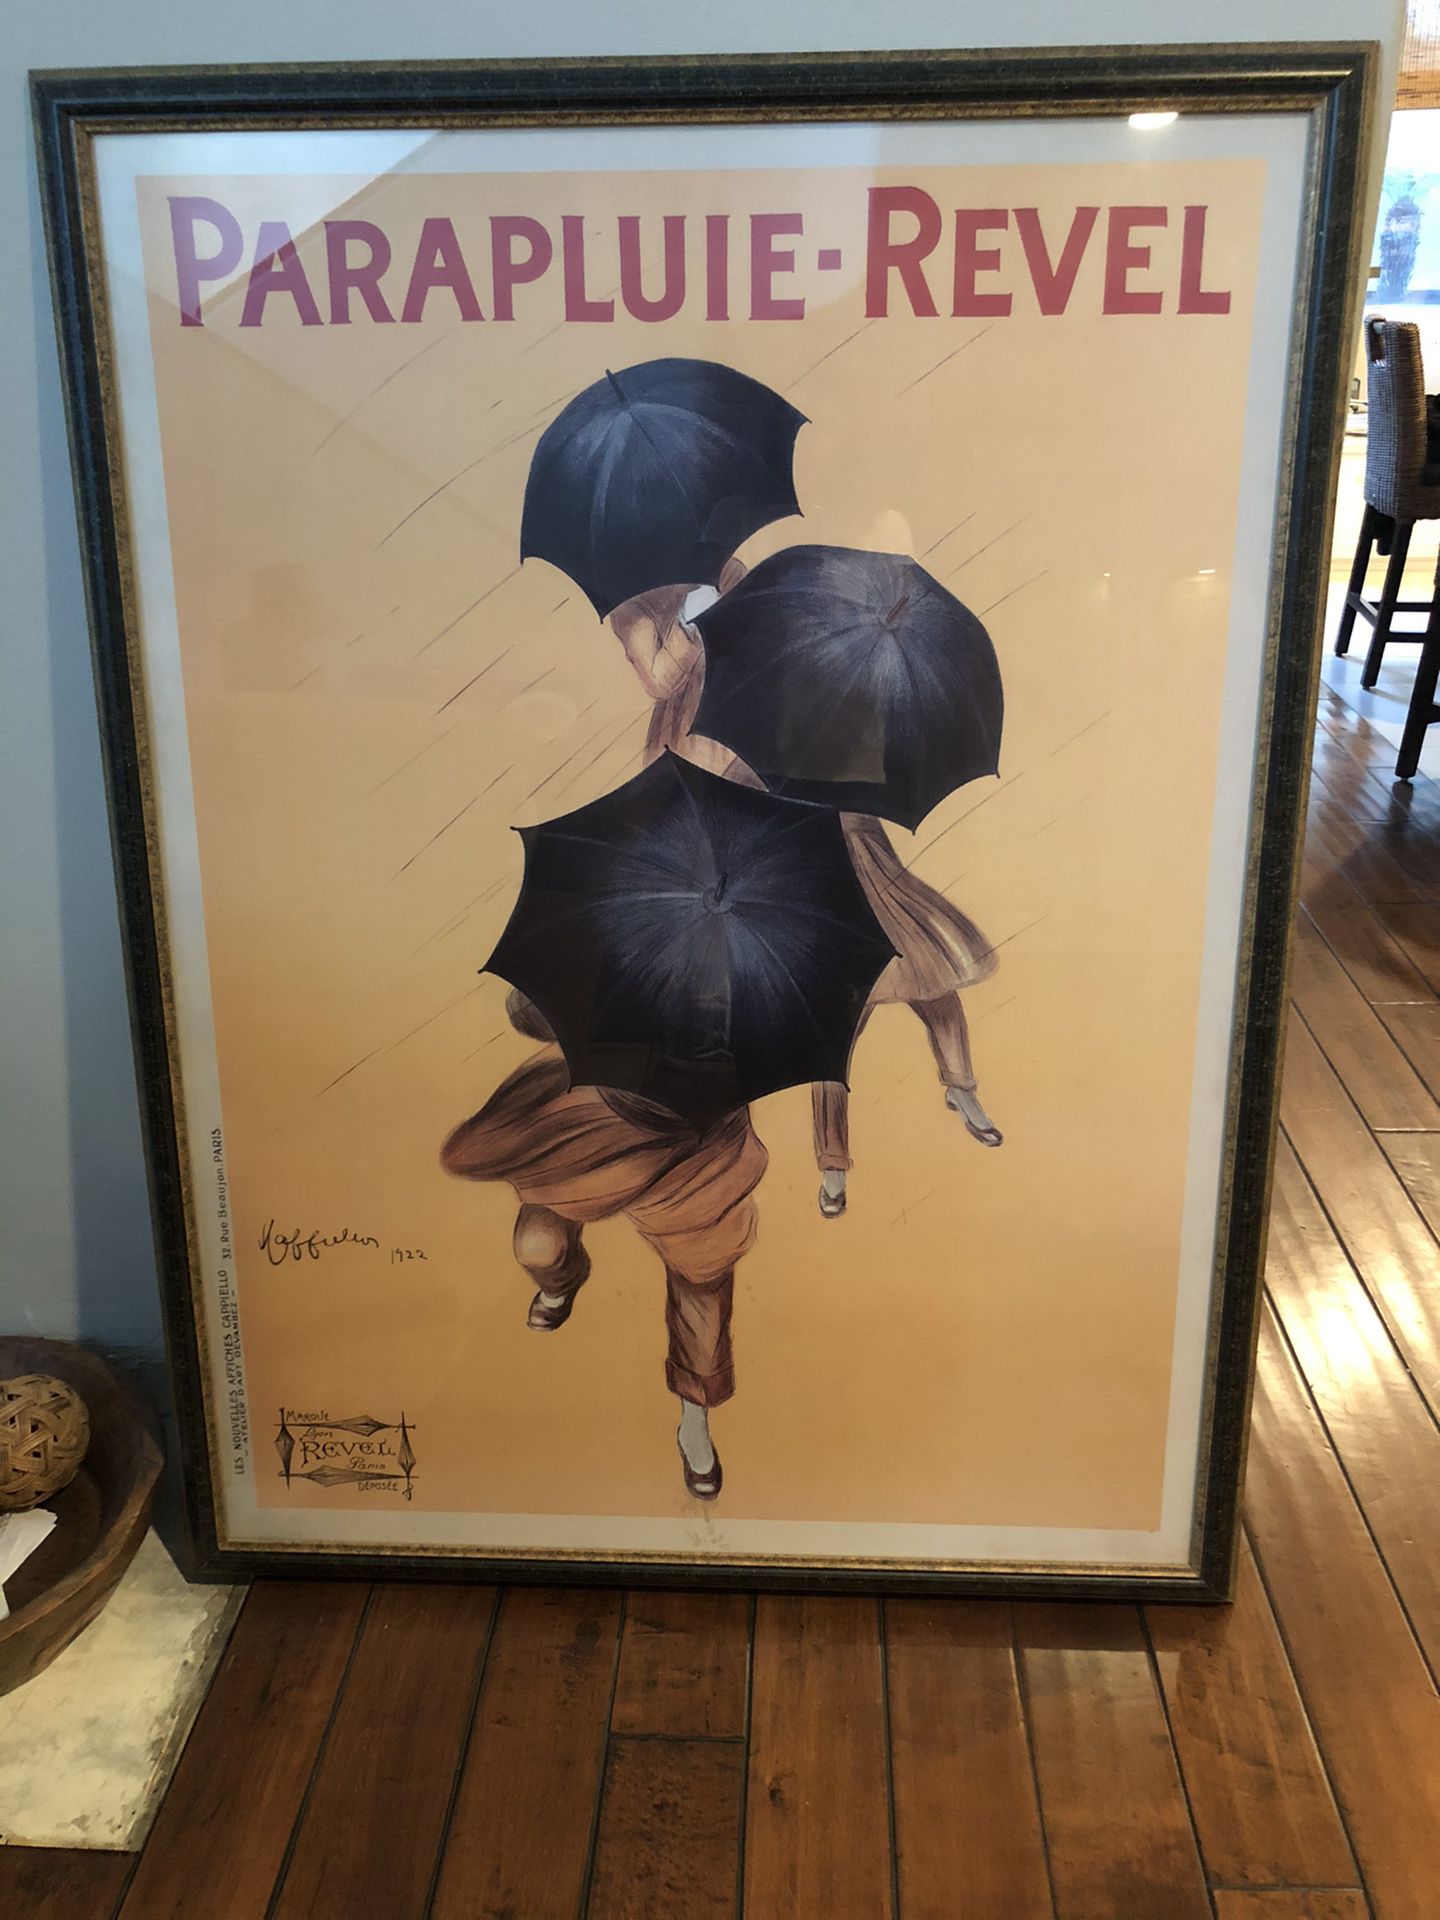 Parapluie Revel by Capiello antique framed poster